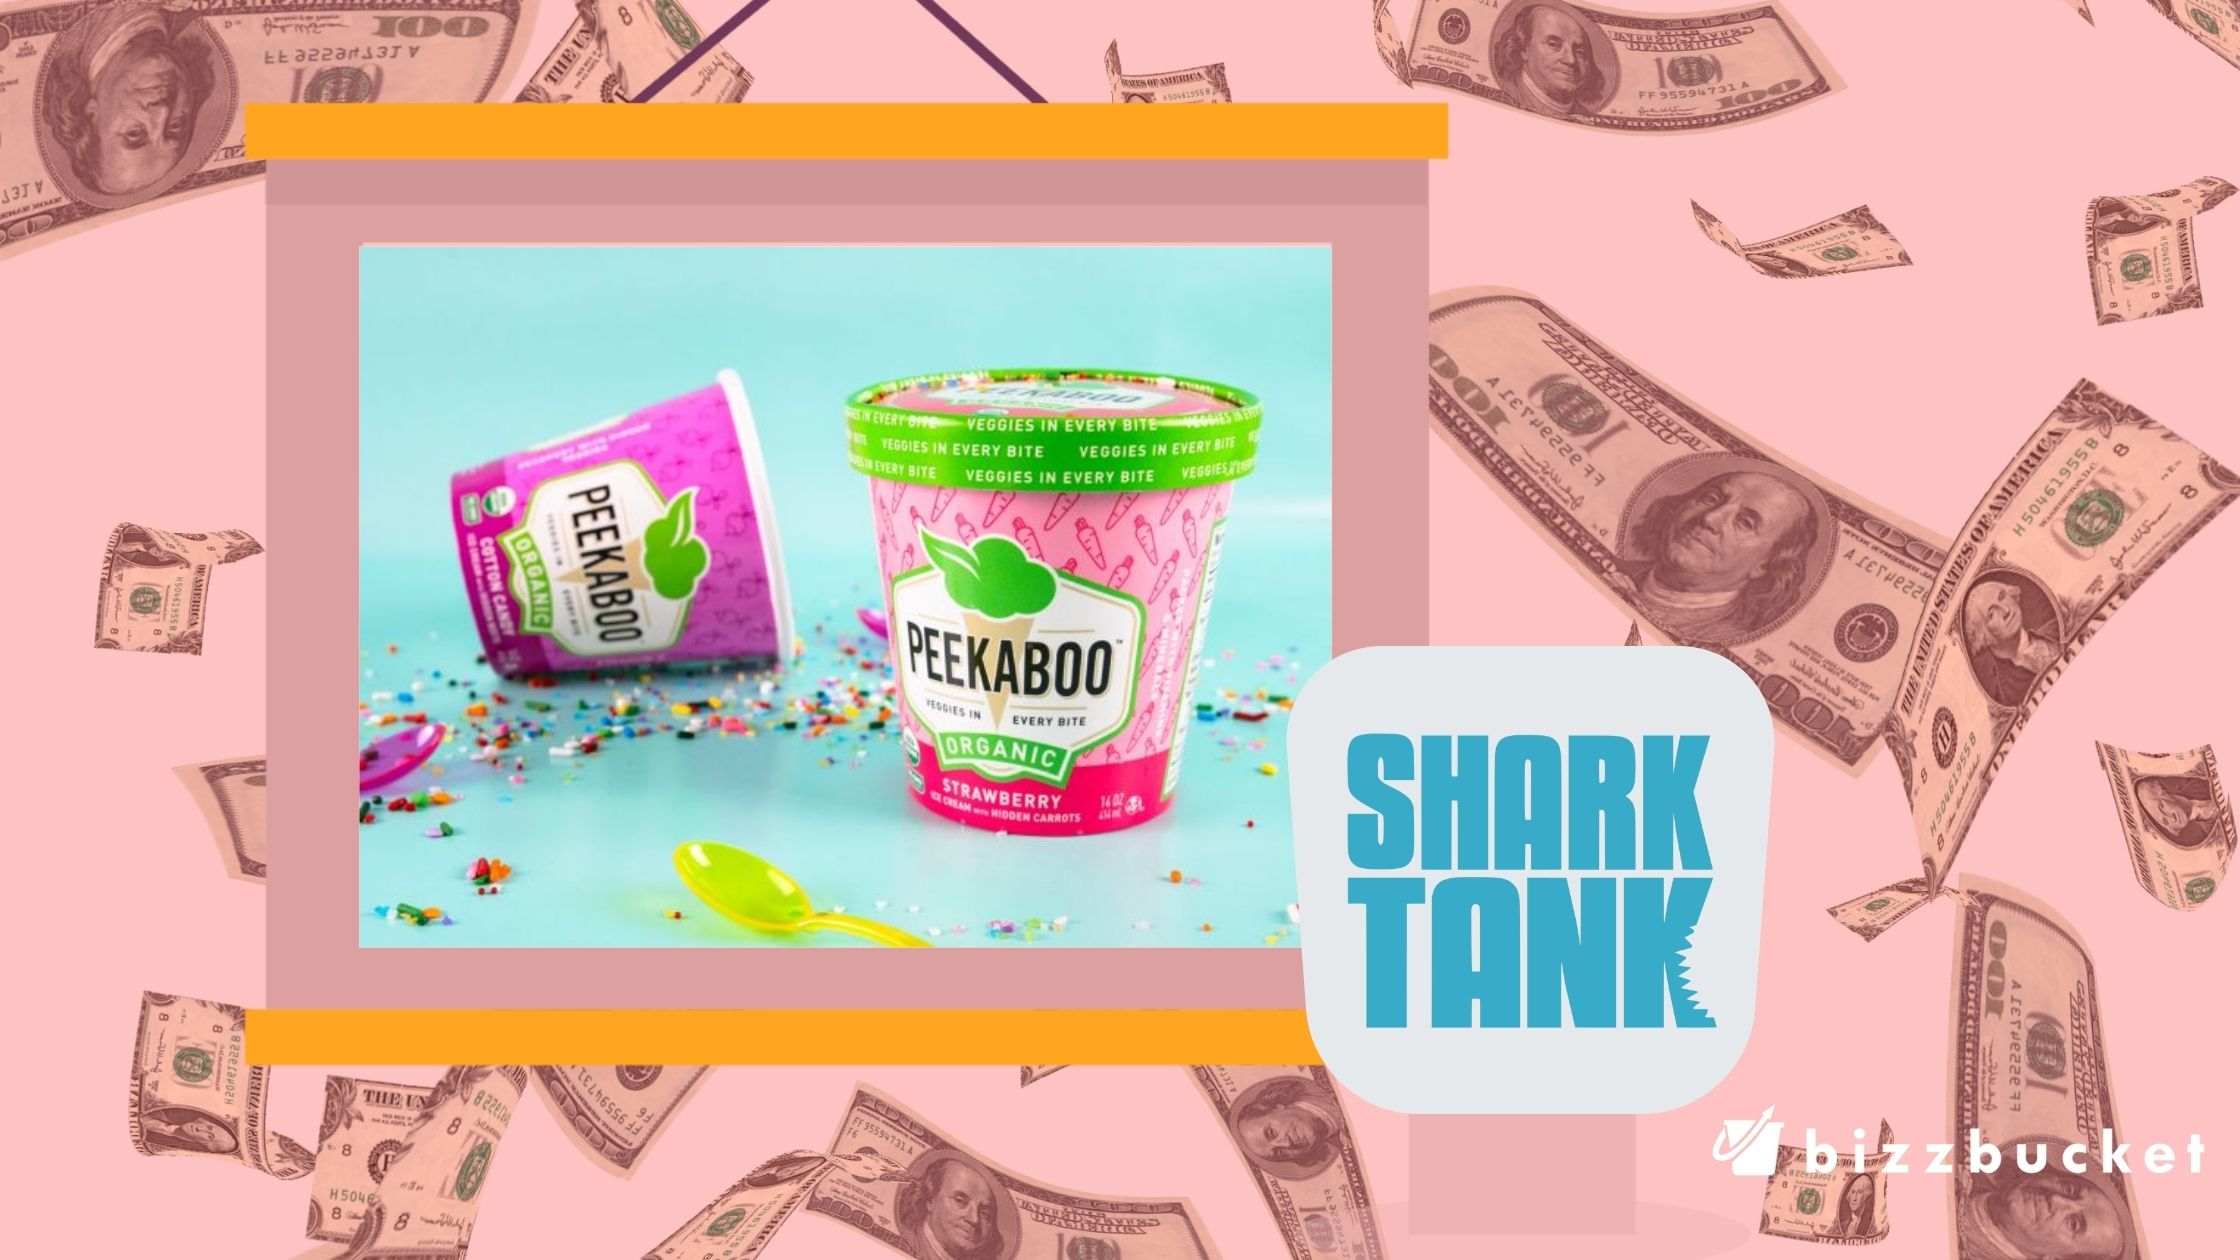 Peekaboo Icecream shark tank update